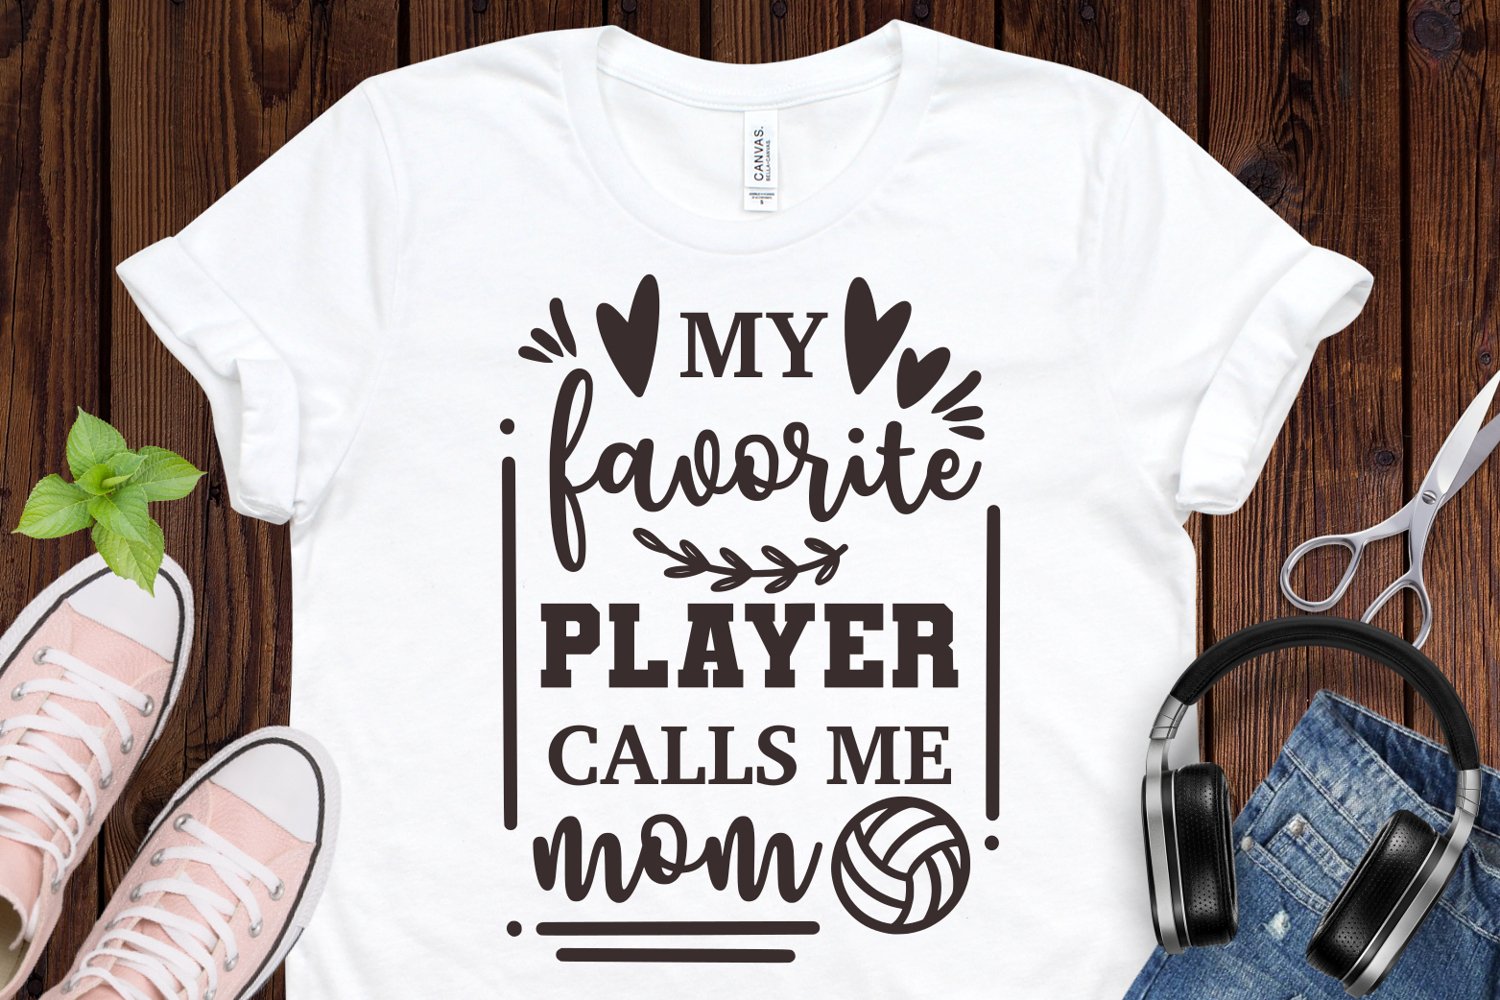 My favorite player calls me mom - t-shirt design.